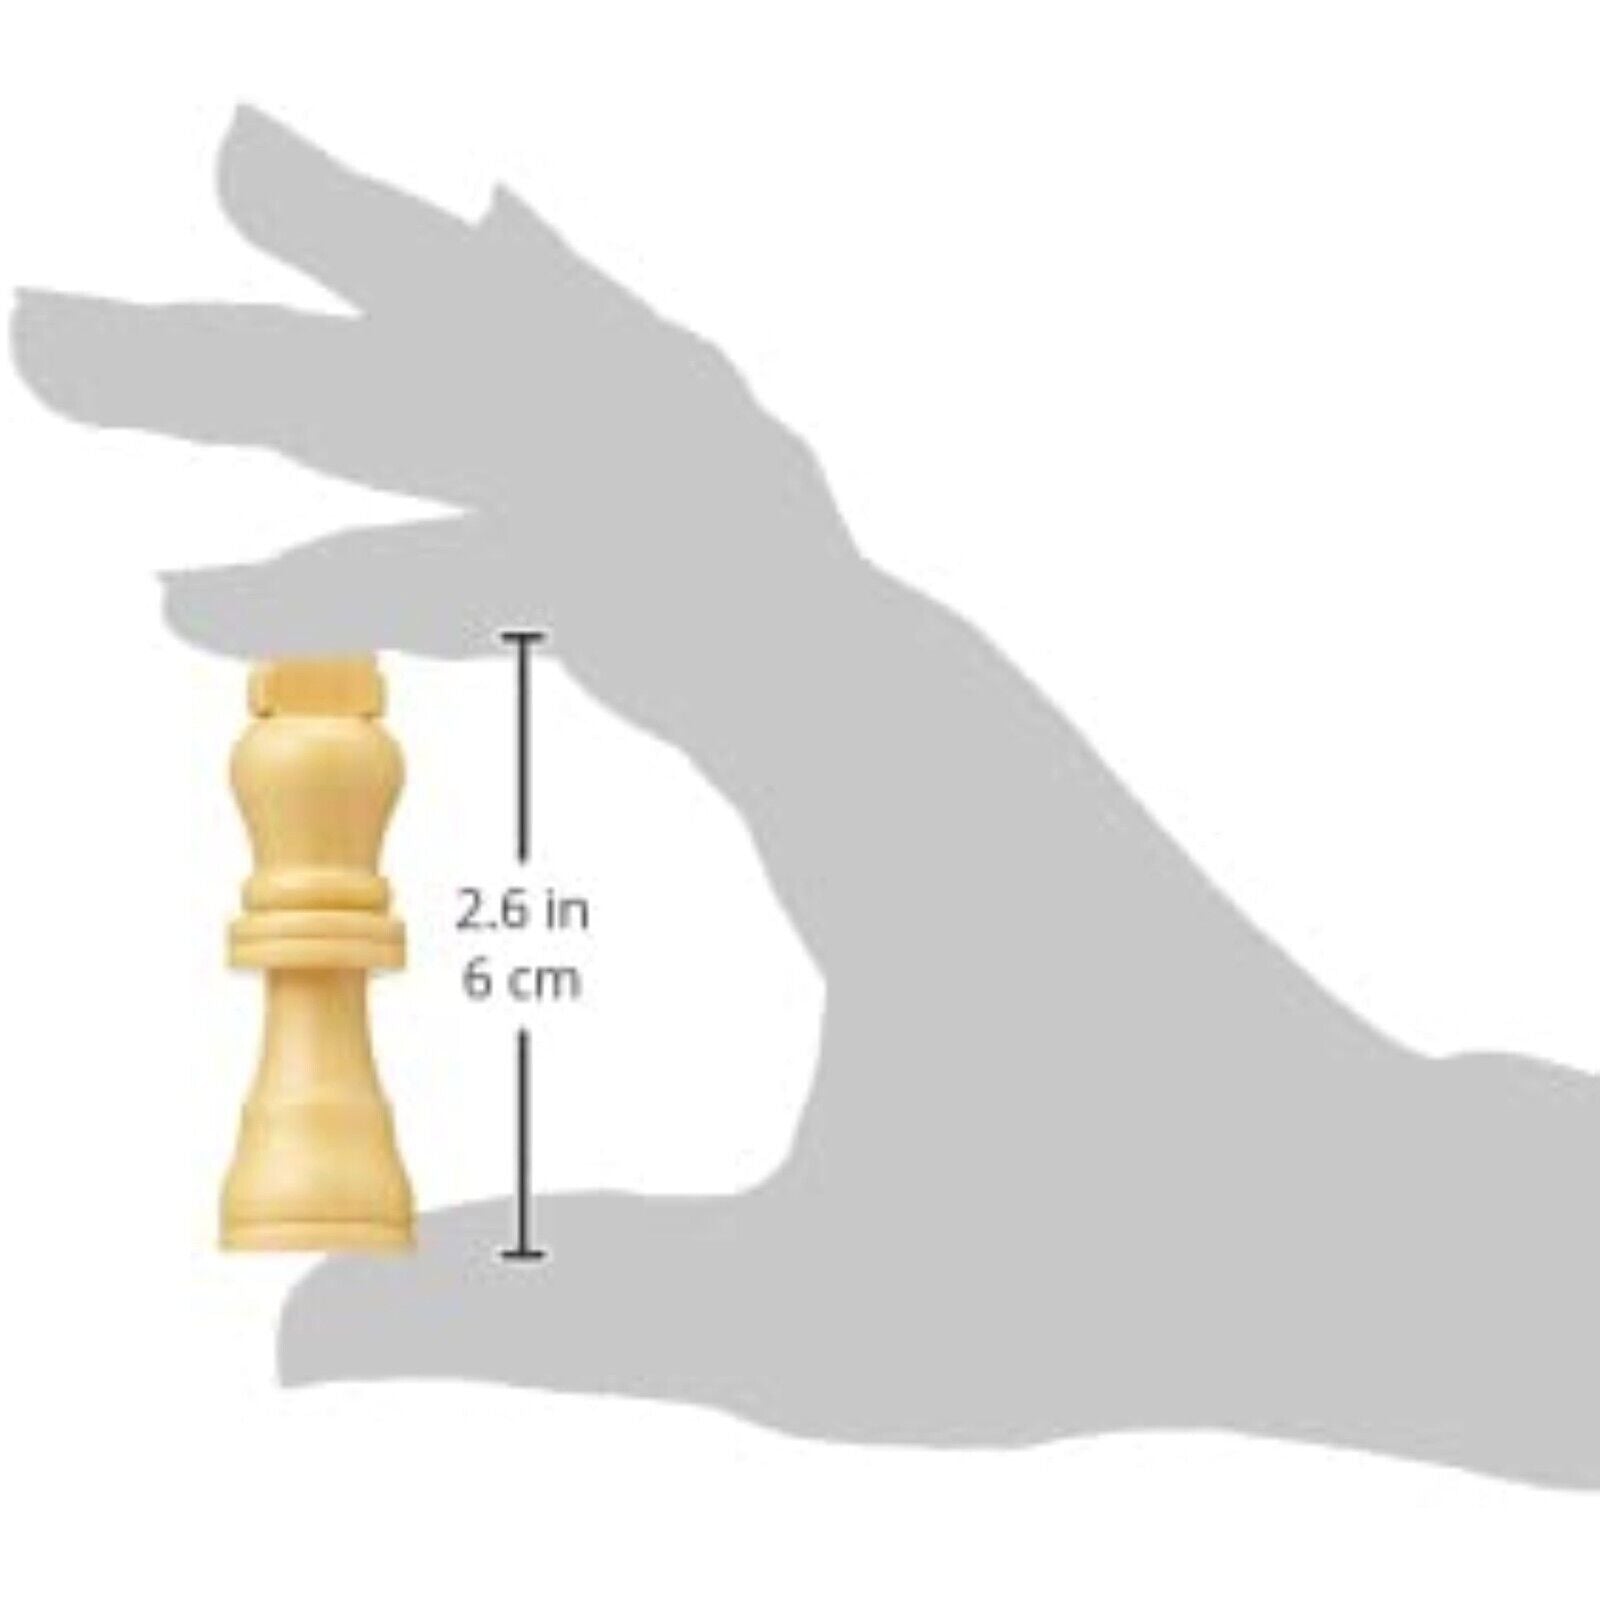 Schach, Dekoratives Schachspiel aus Holz PEARL Schachbrett  19.2x27.6 Neu Chess